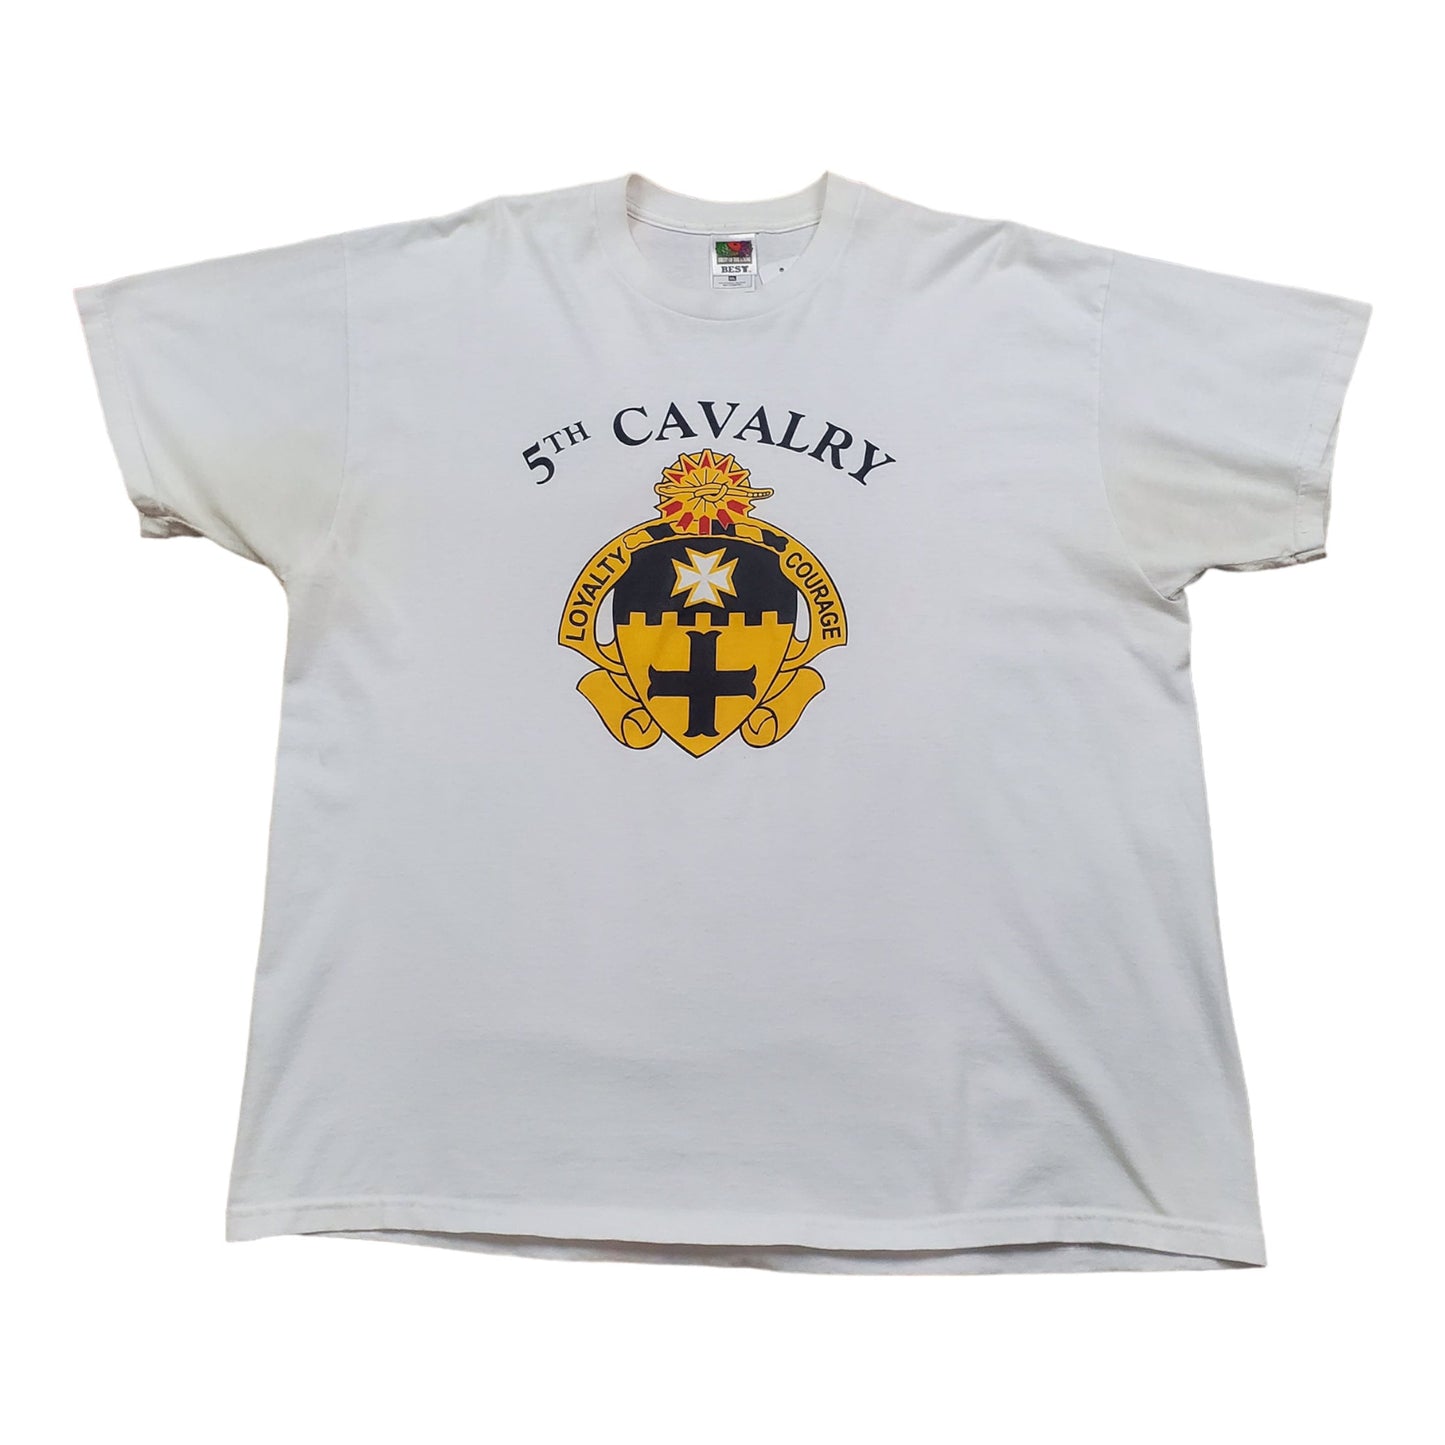 1990s/2000s 5th Cavalry T-Shirt Size XL/XXL